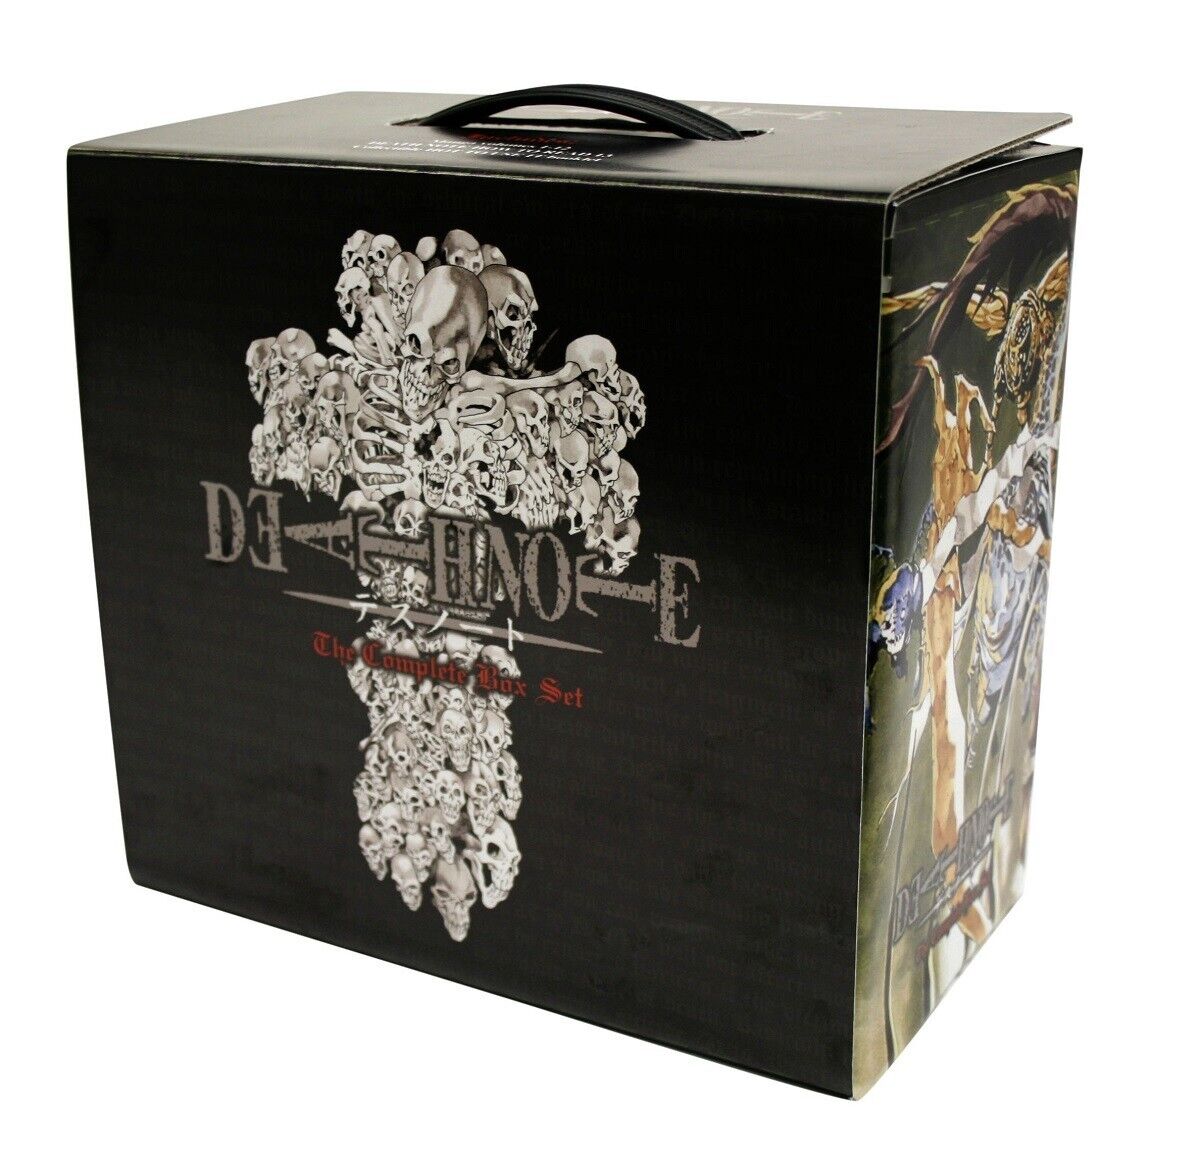 Death Note The Complete Manga Box Set Vol 1-12